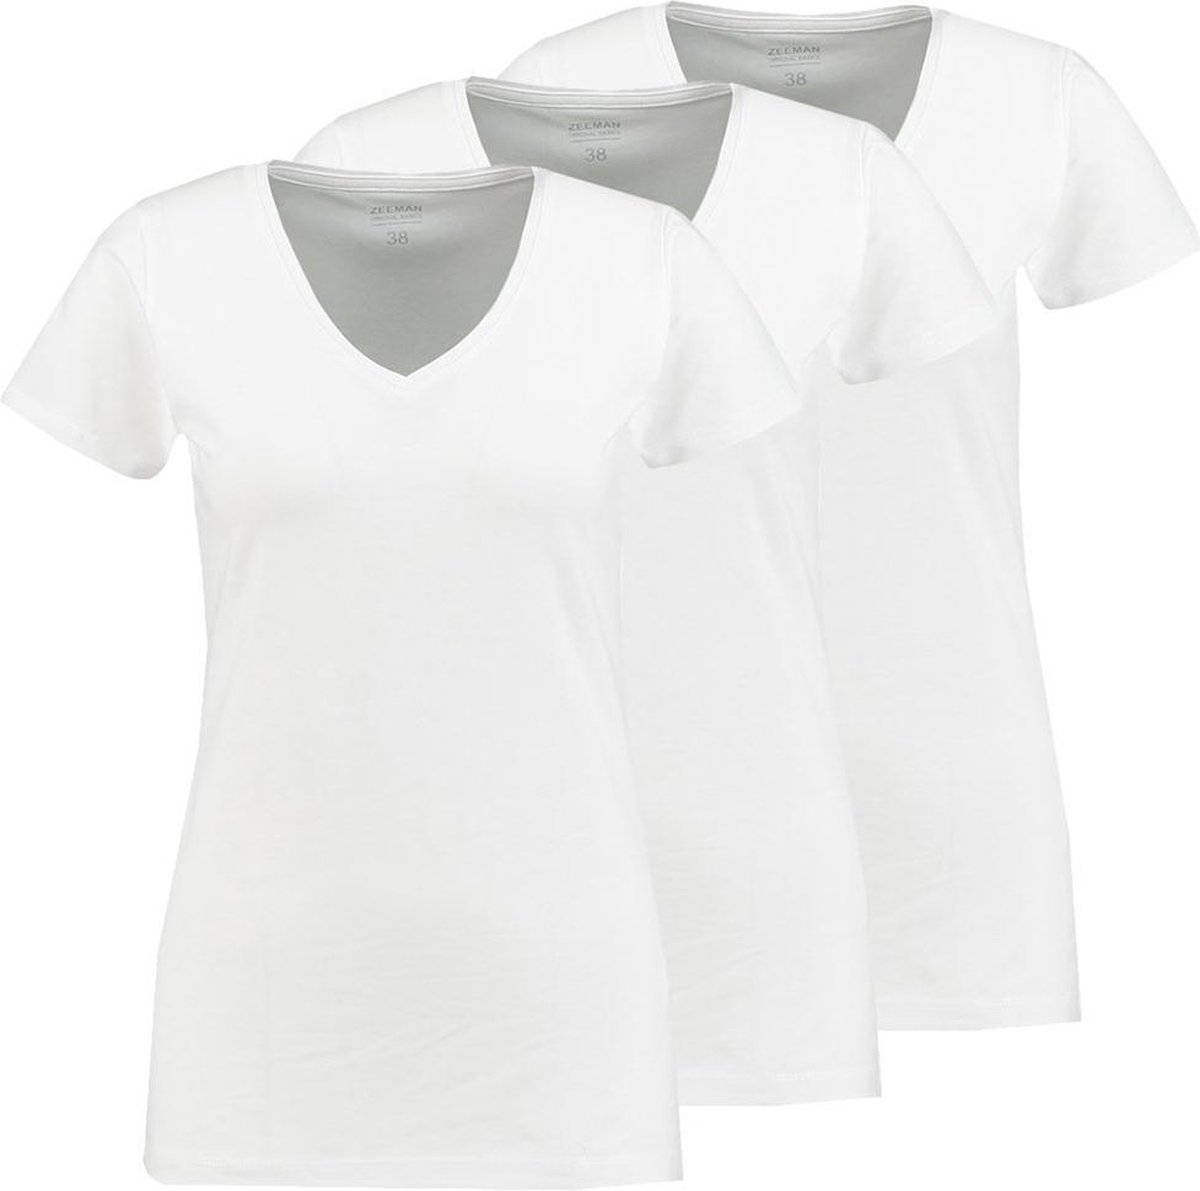 Zeeman dames T-shirt - maat 48 - 3 stuks | bol.com